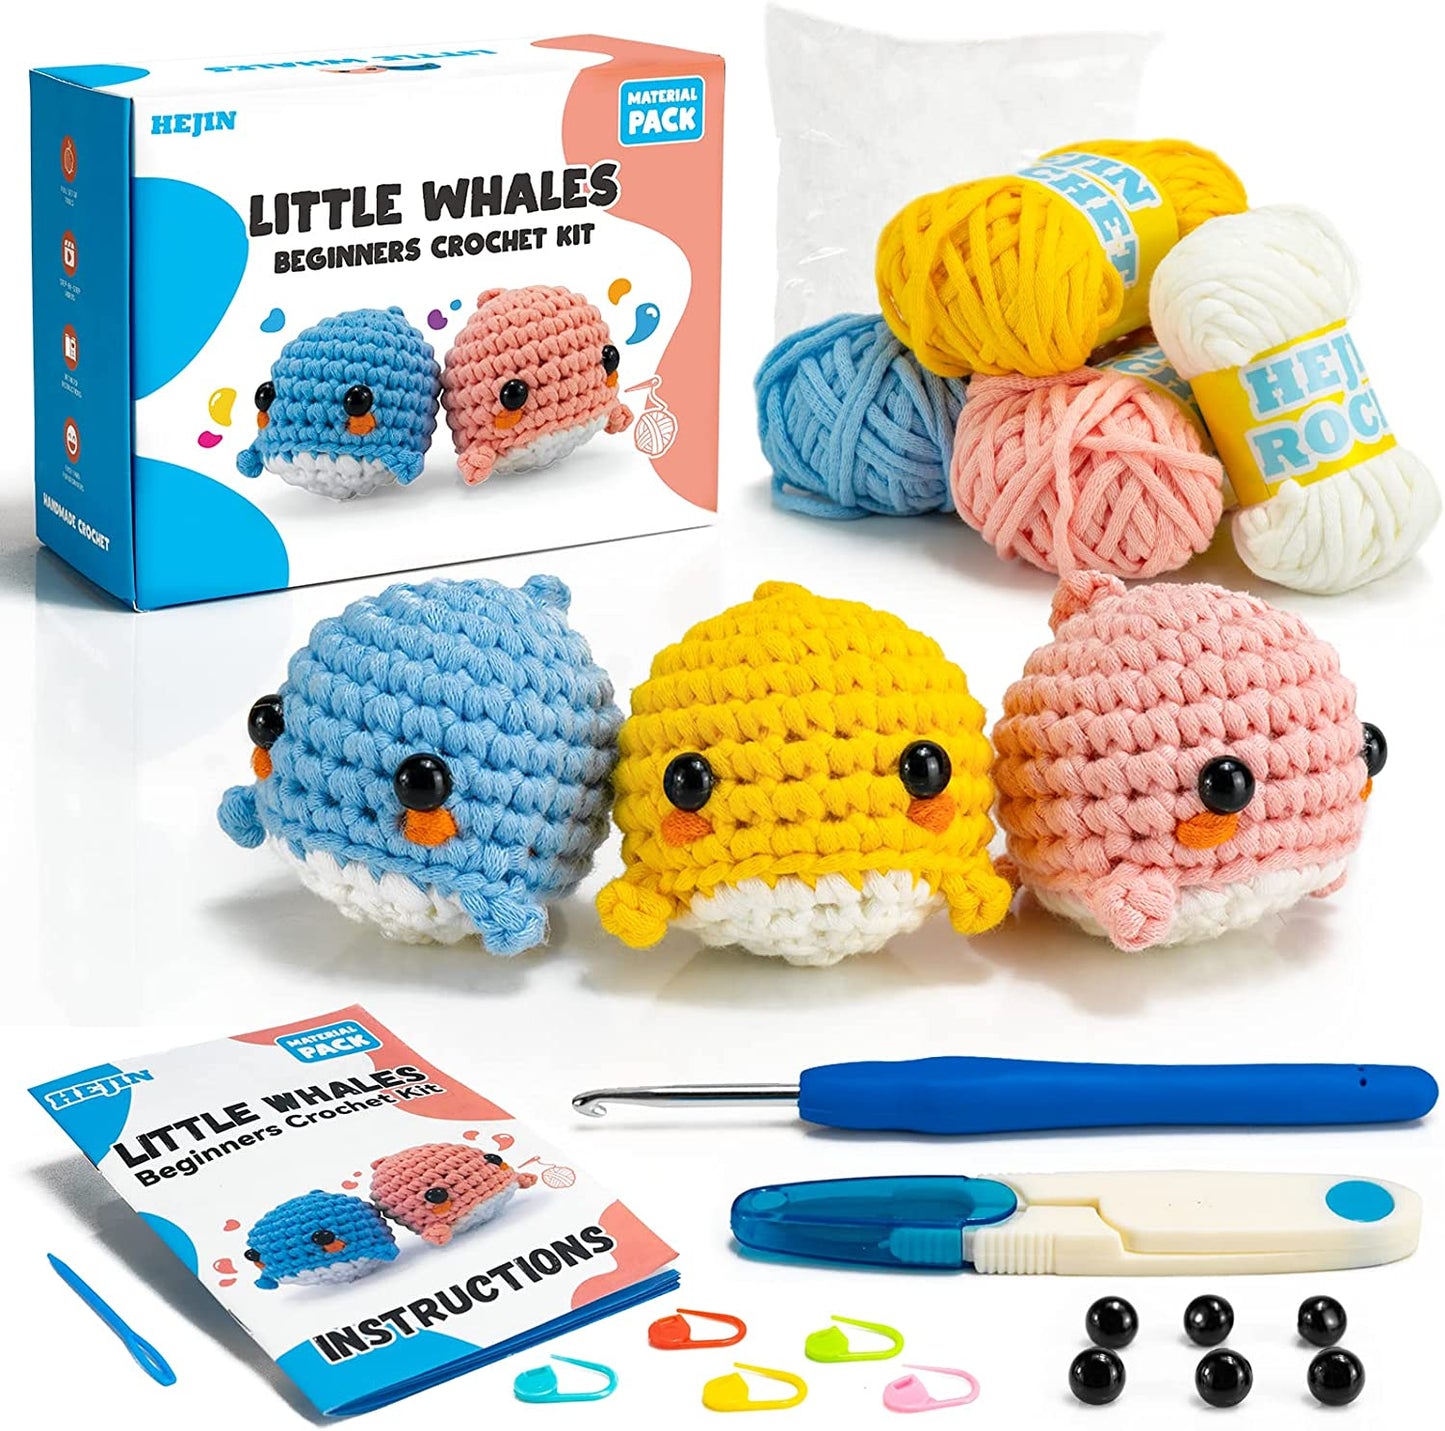 Beginner Crochet Kit, Crochet Kits for Kids and Adults, 3PCS Crochet Animal Kit for Beginners Include Videos Tutorials, Yarn, Eyes, Stuffing, Crochet Hook - Boys and Girls Birthdays Gift